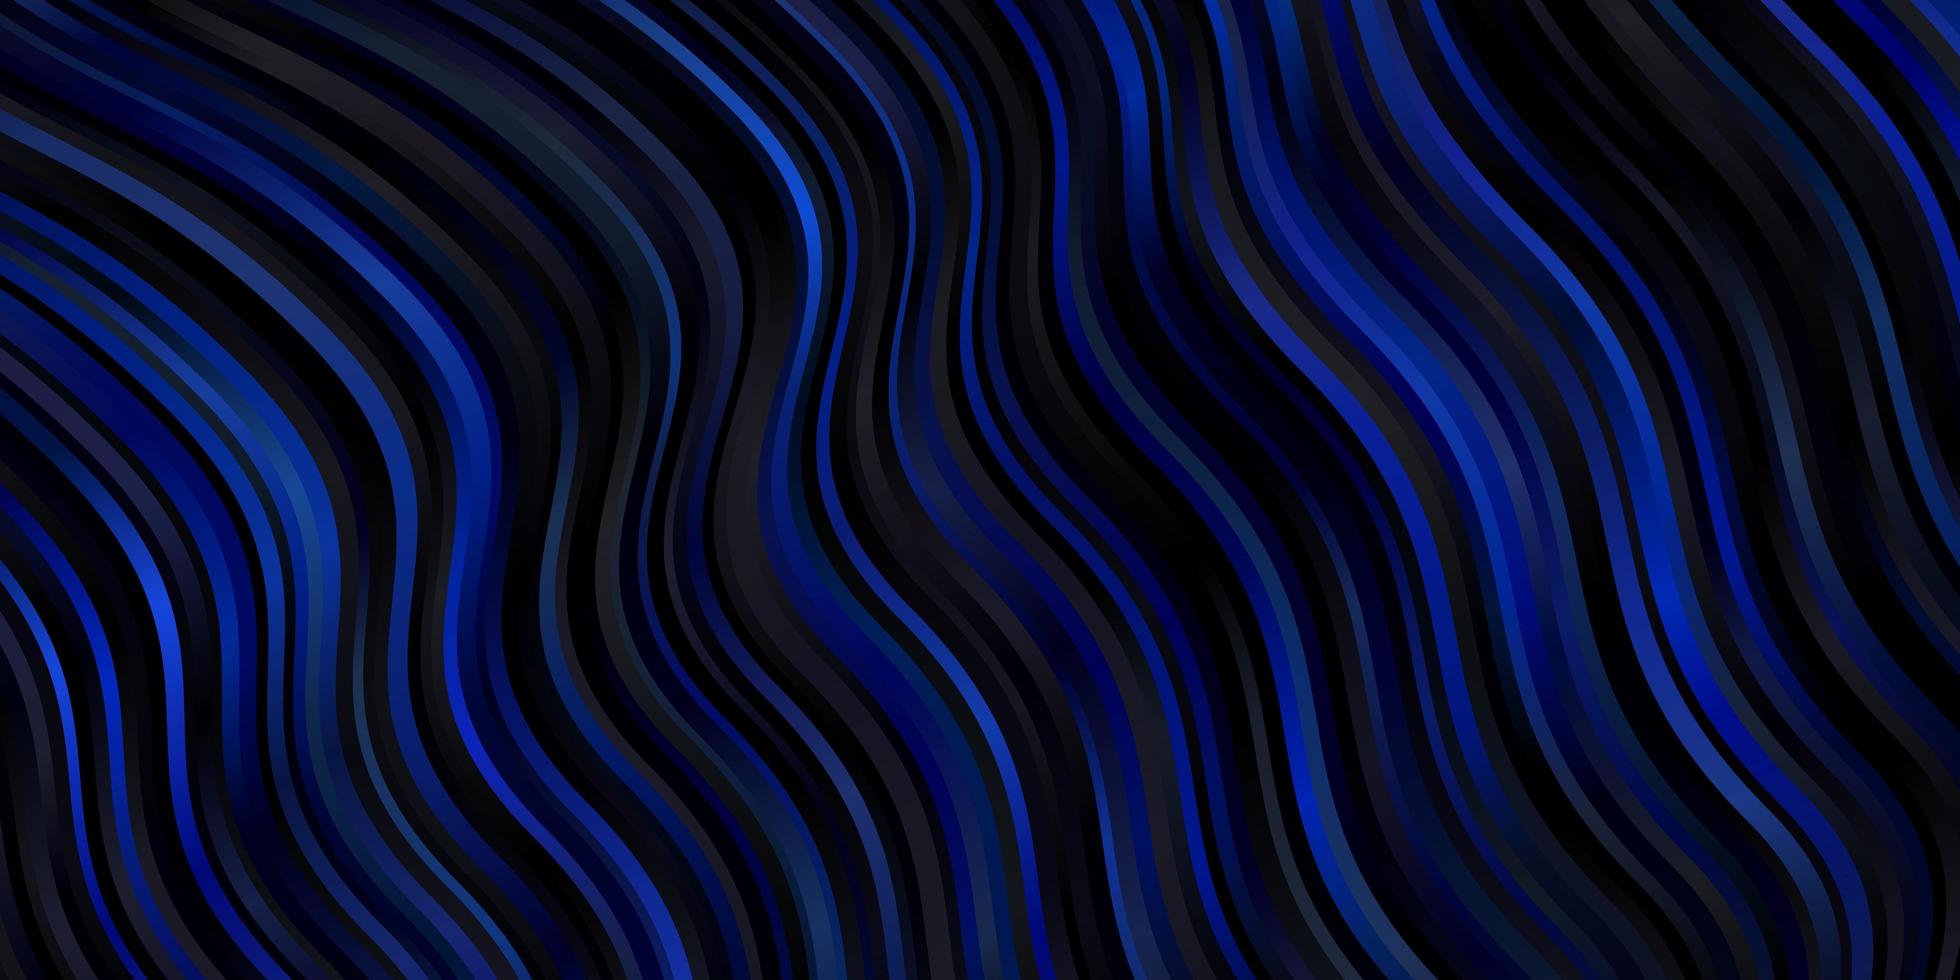 Plantilla de vector azul oscuro con líneas ilustración brillante con plantilla de arcos circulares degradados para teléfonos móviles